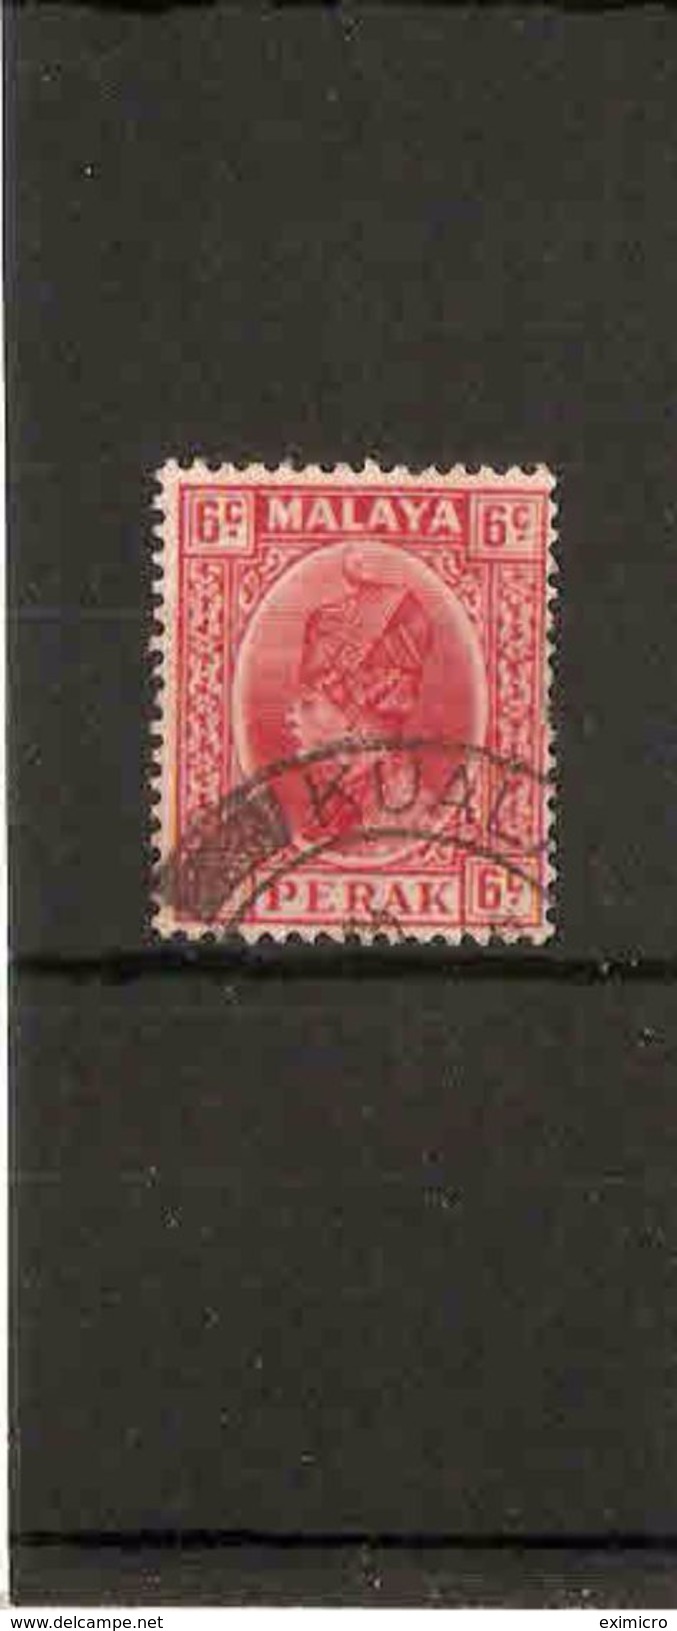 MALAYA - PERAK 1937 6c SG 92 FINE USED Cat £7 - Perak